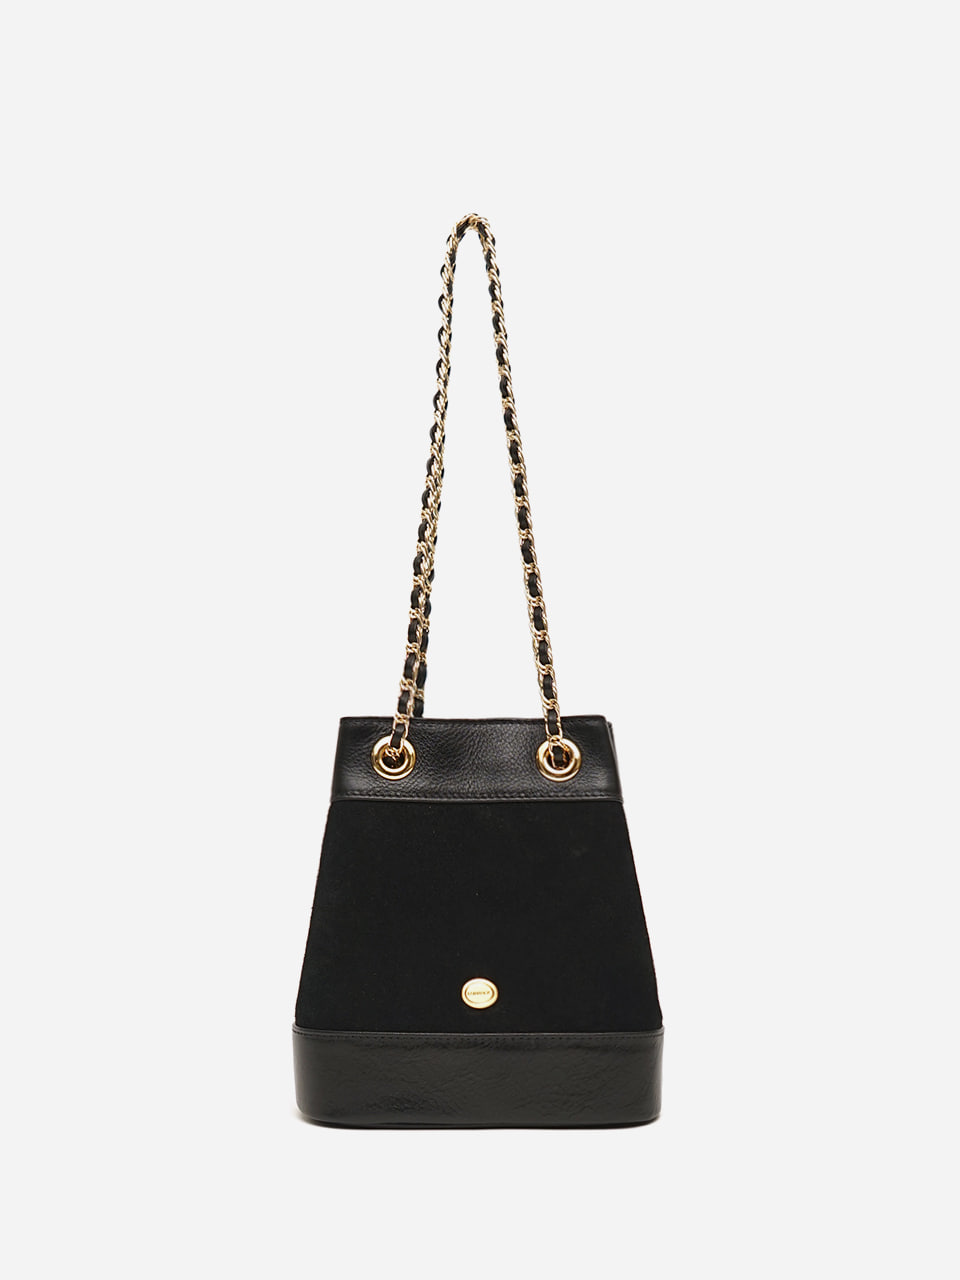 Pendant mini chain bag / black suede (sold out)